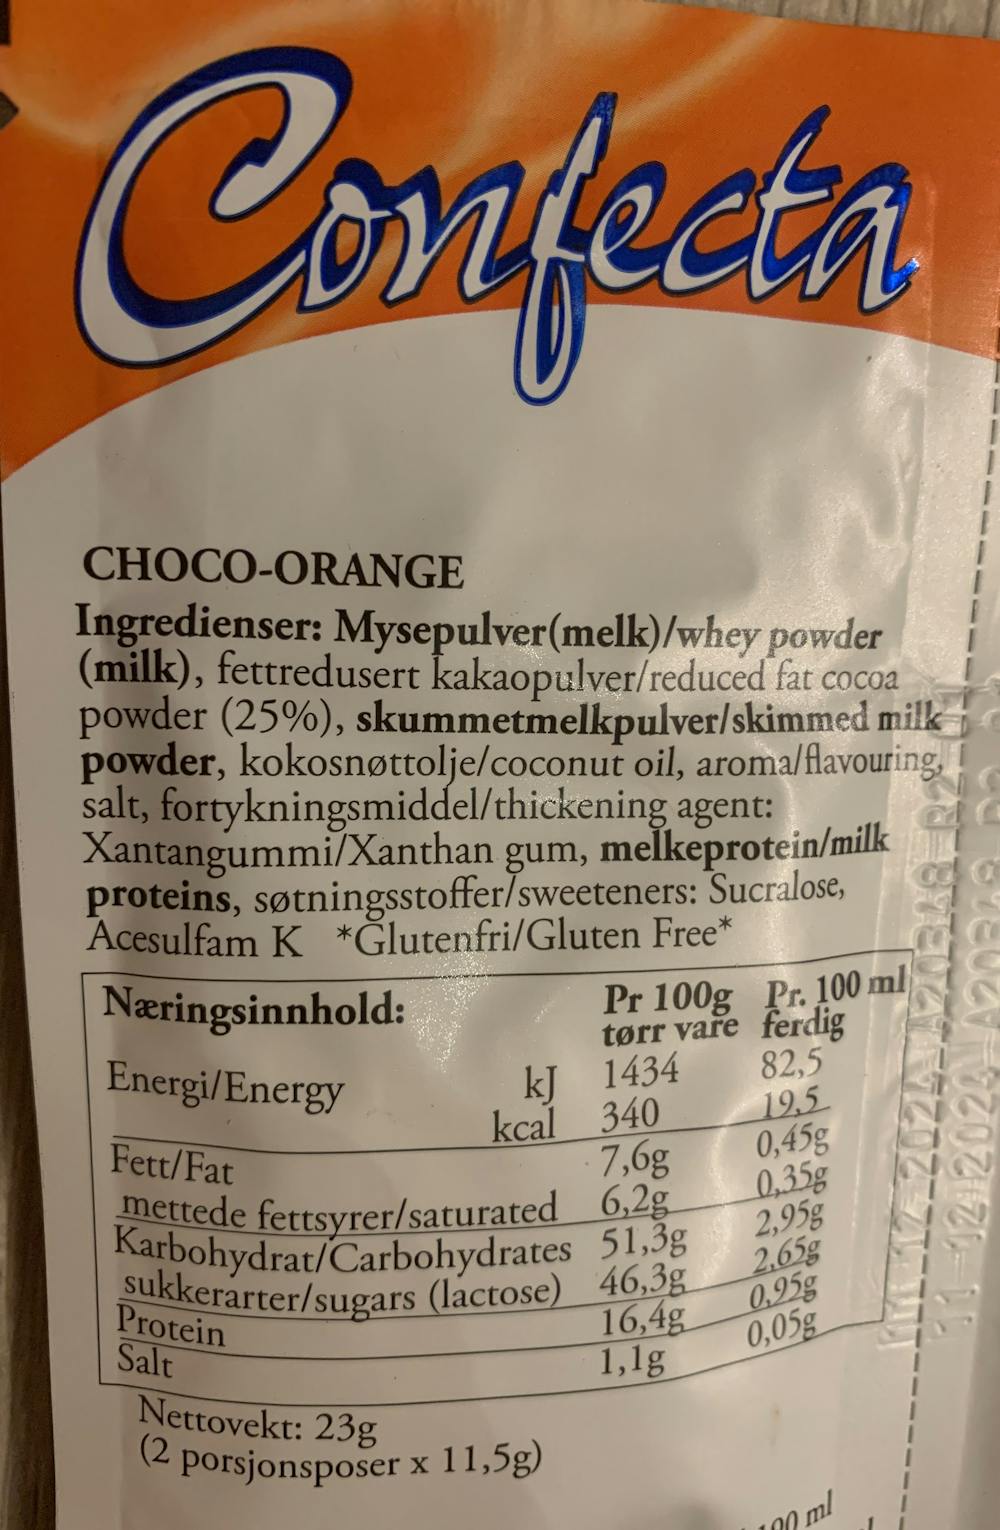 Ingredienslisten til Choco Orange Confecta